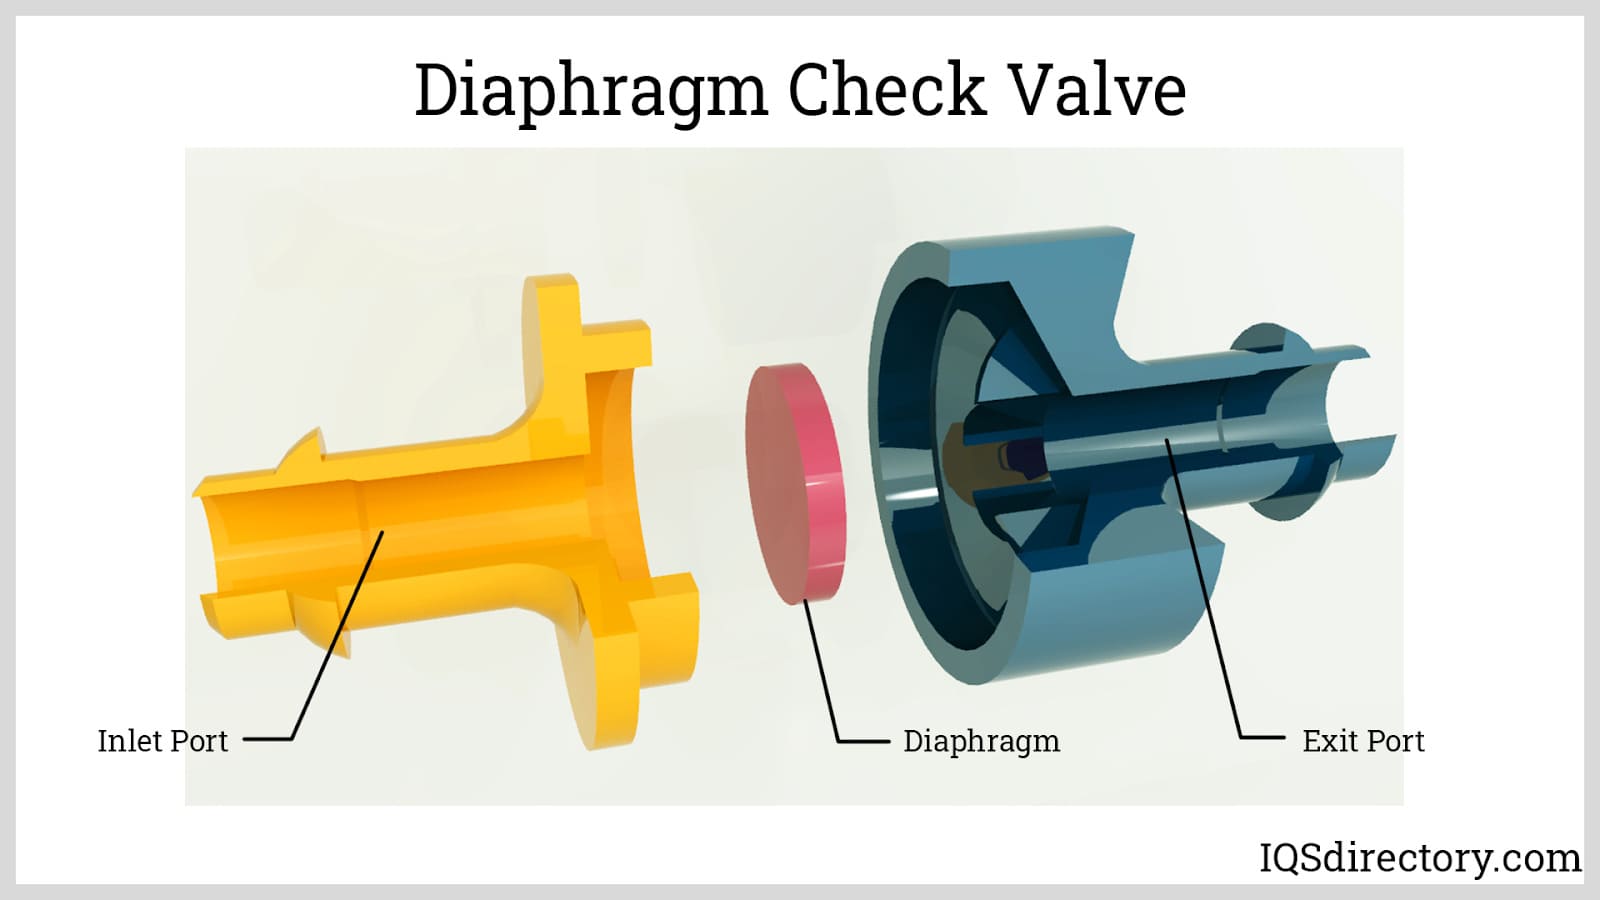 Diaphragm Check Valve